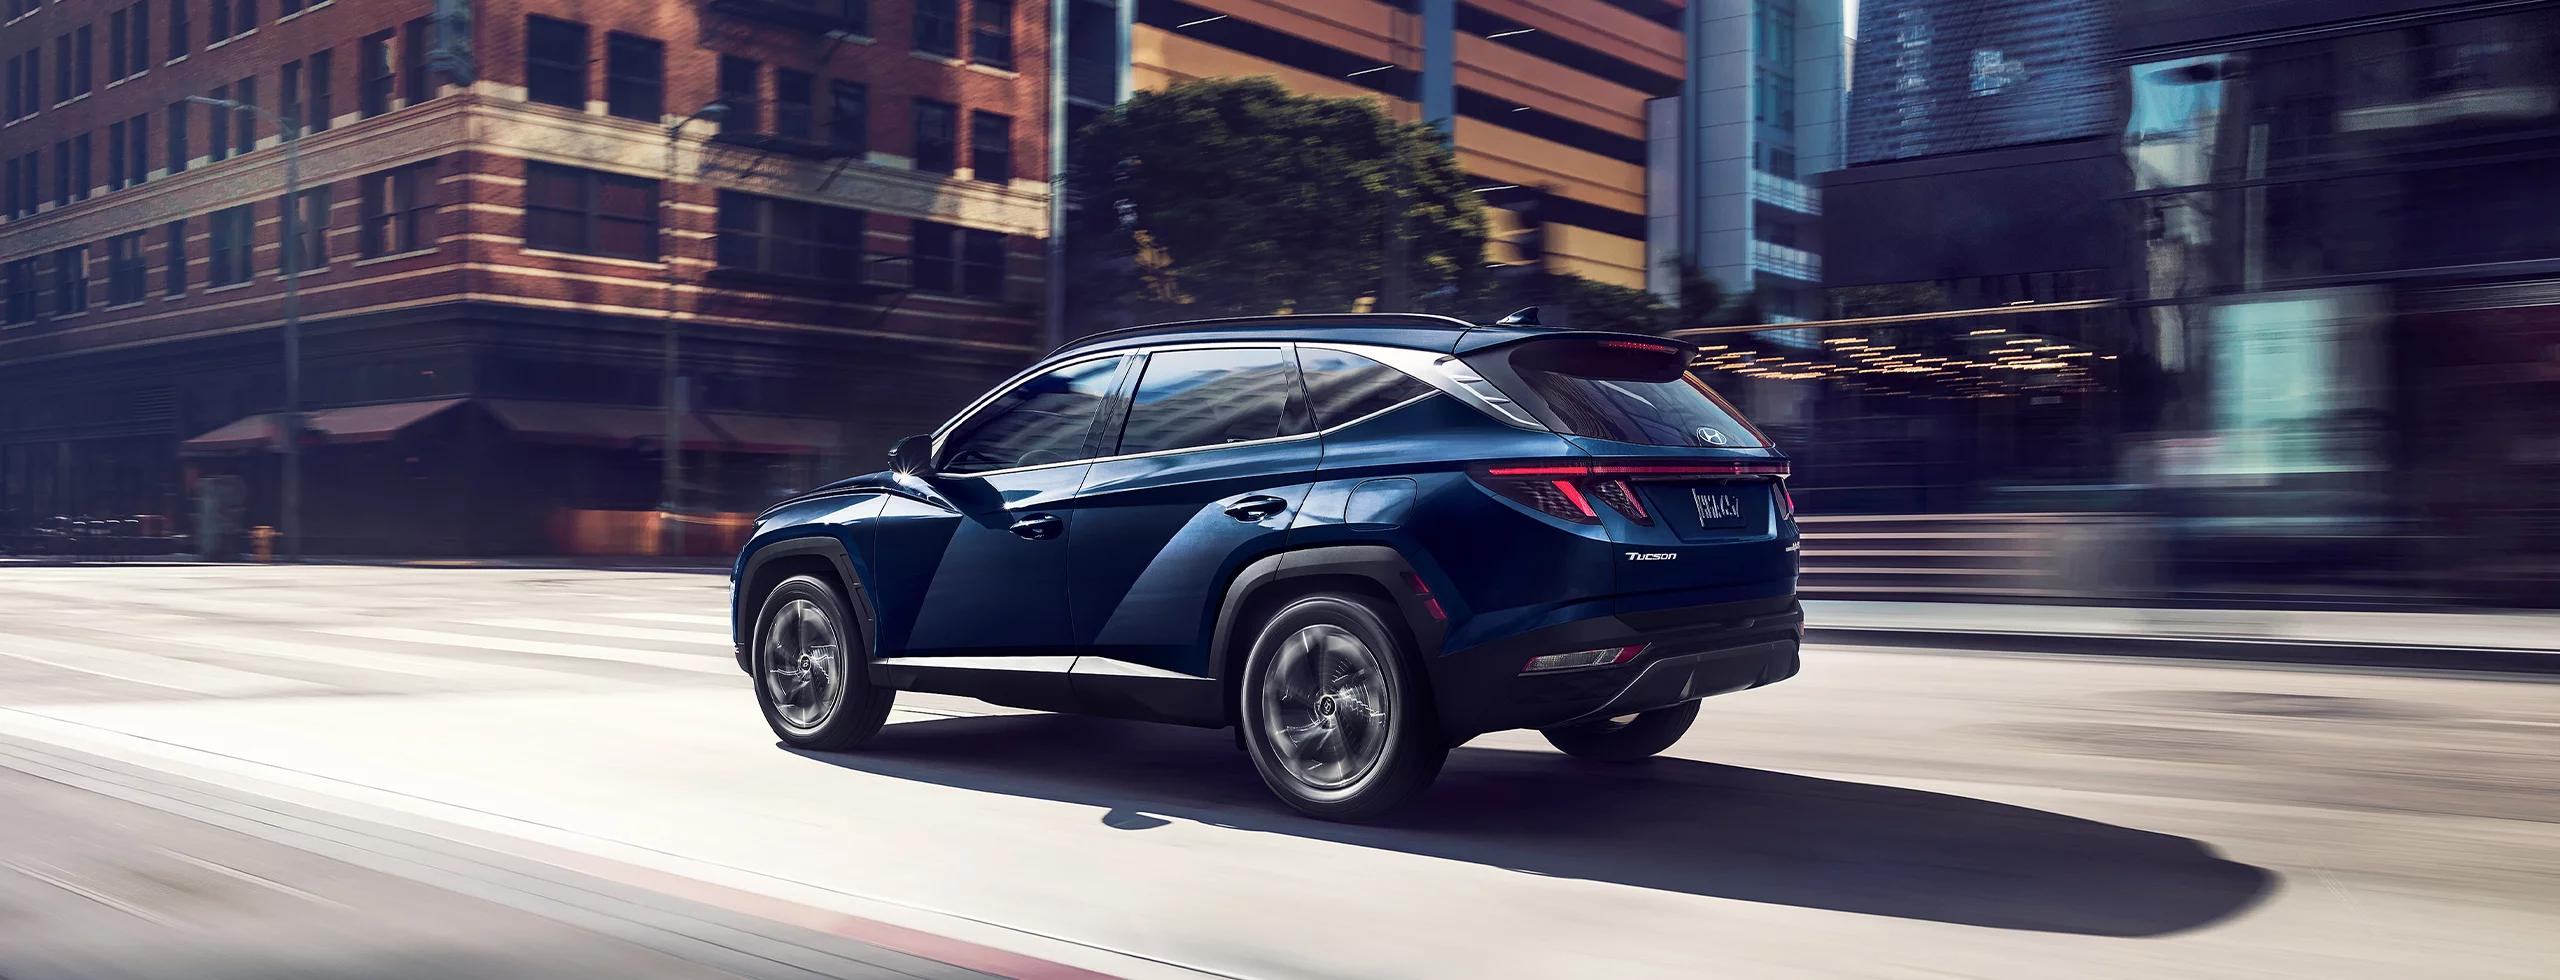 Le Futur Hyundai Tucson 2025 : Innovation et Style - Brossard Hyundai